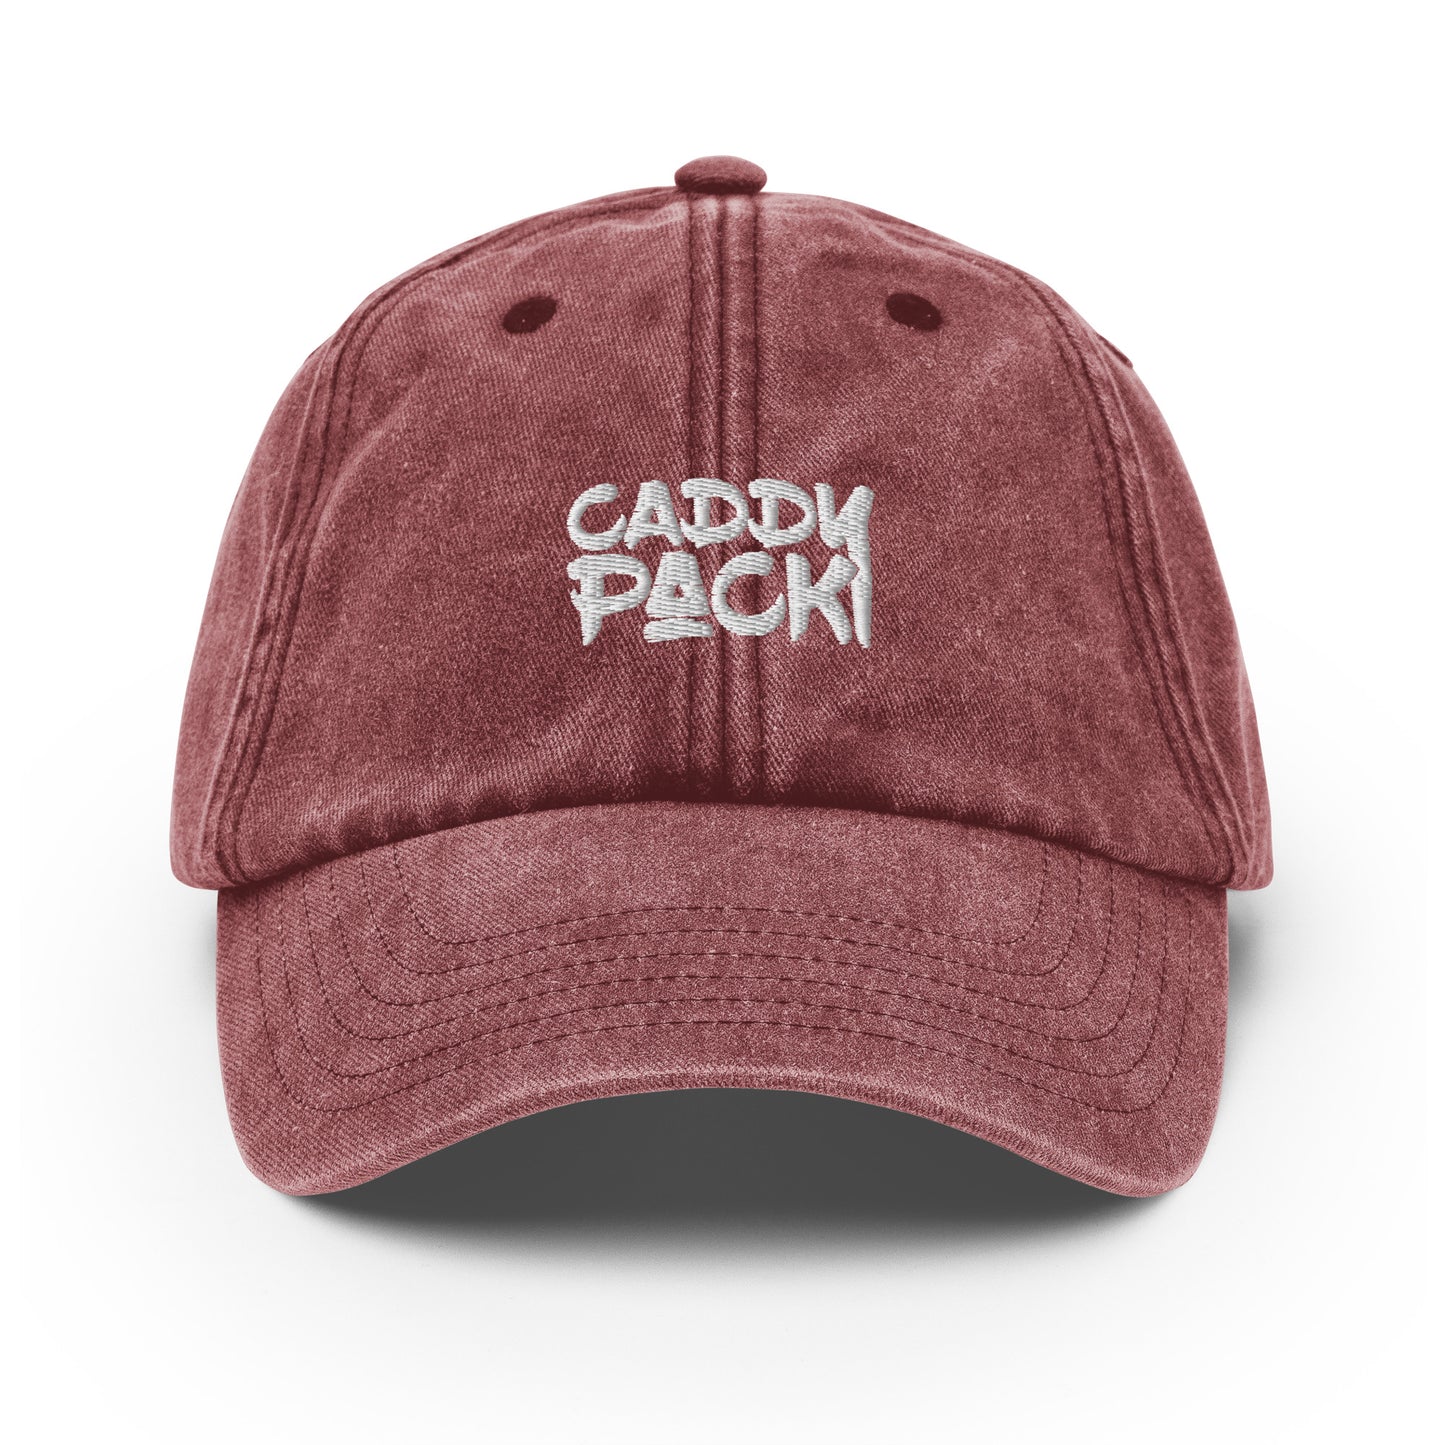 Caddy Pack "Day 1" Cap